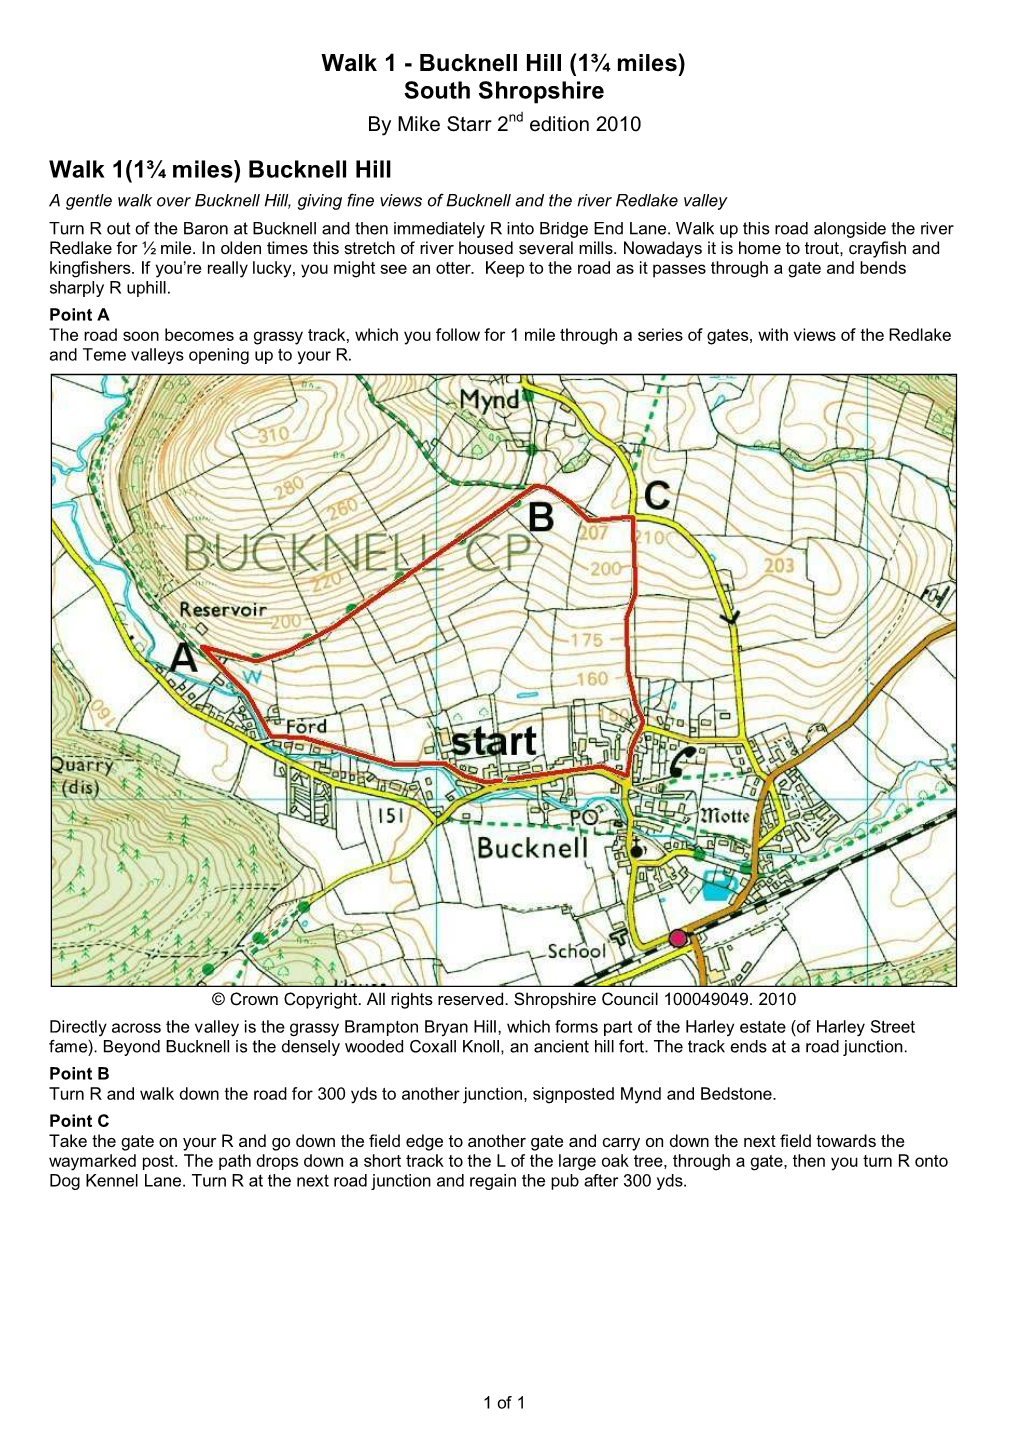 Walk 1 - Bucknell Hill (1¾ Miles) South Shropshire